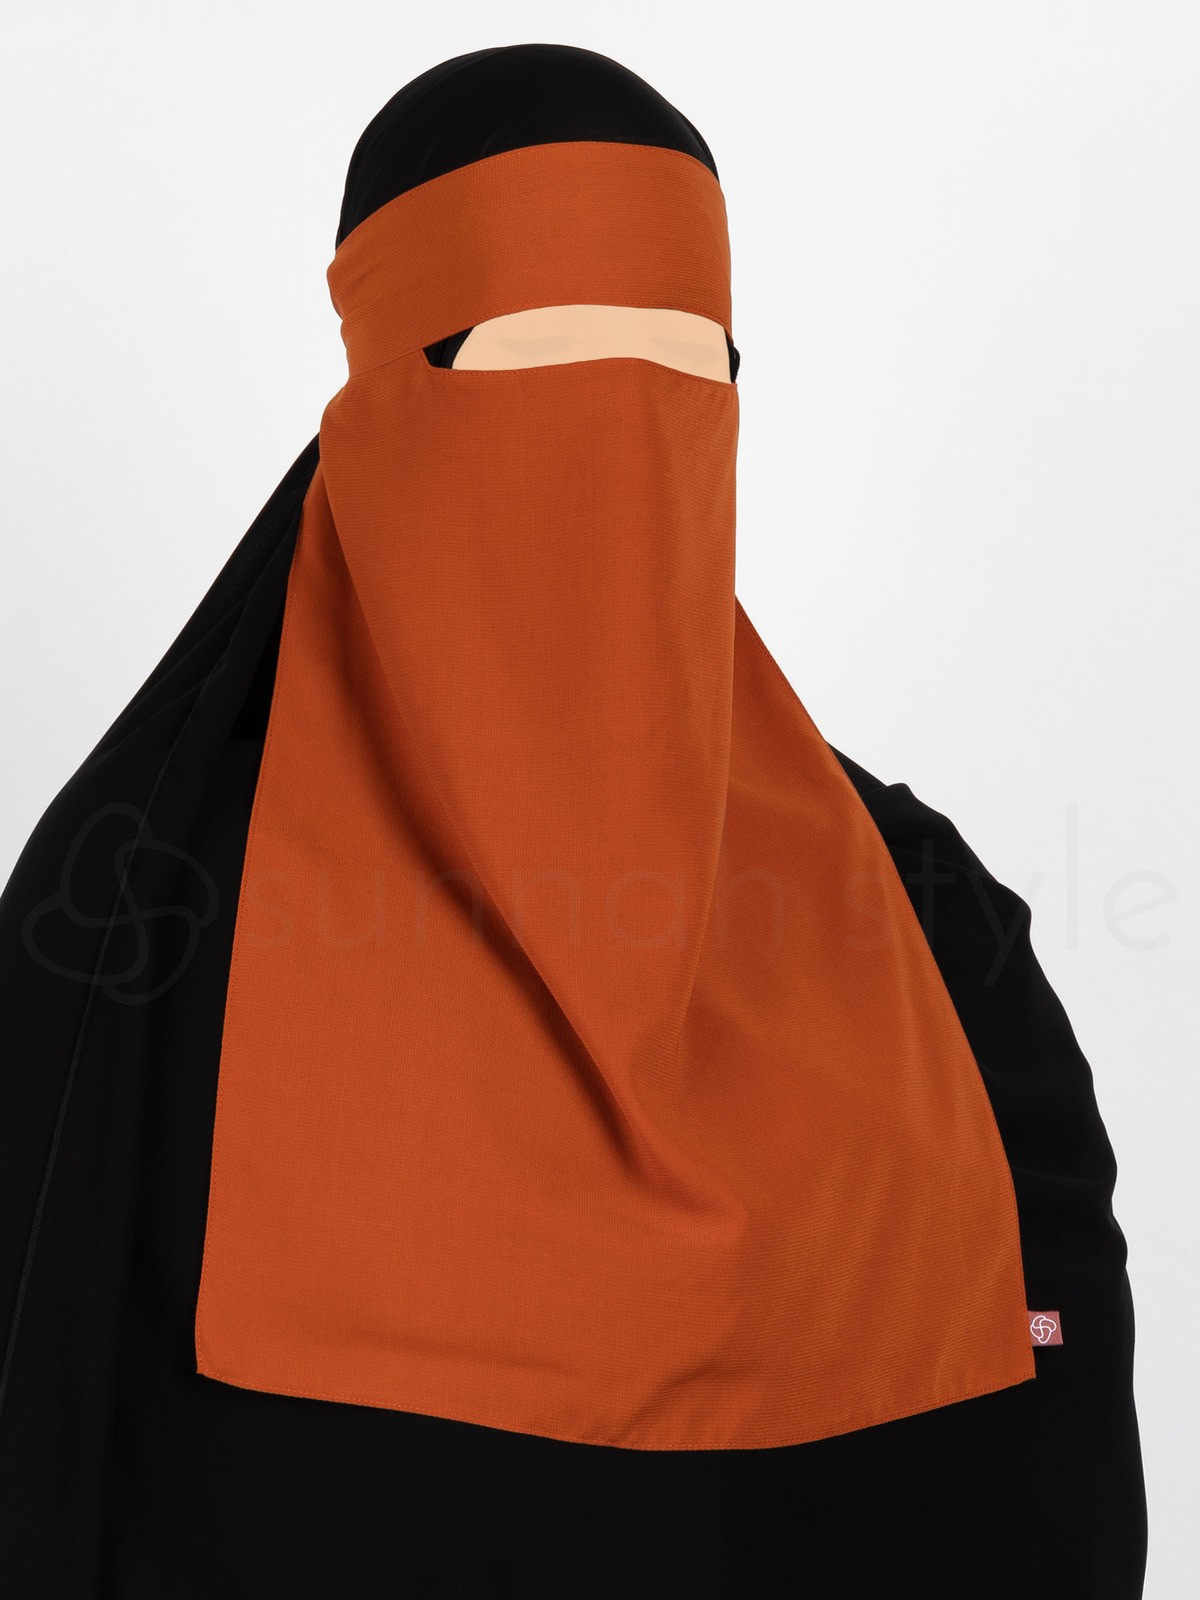 Sunnah Style - Narrow No-Pinch One Layer Niqab (Autumn)